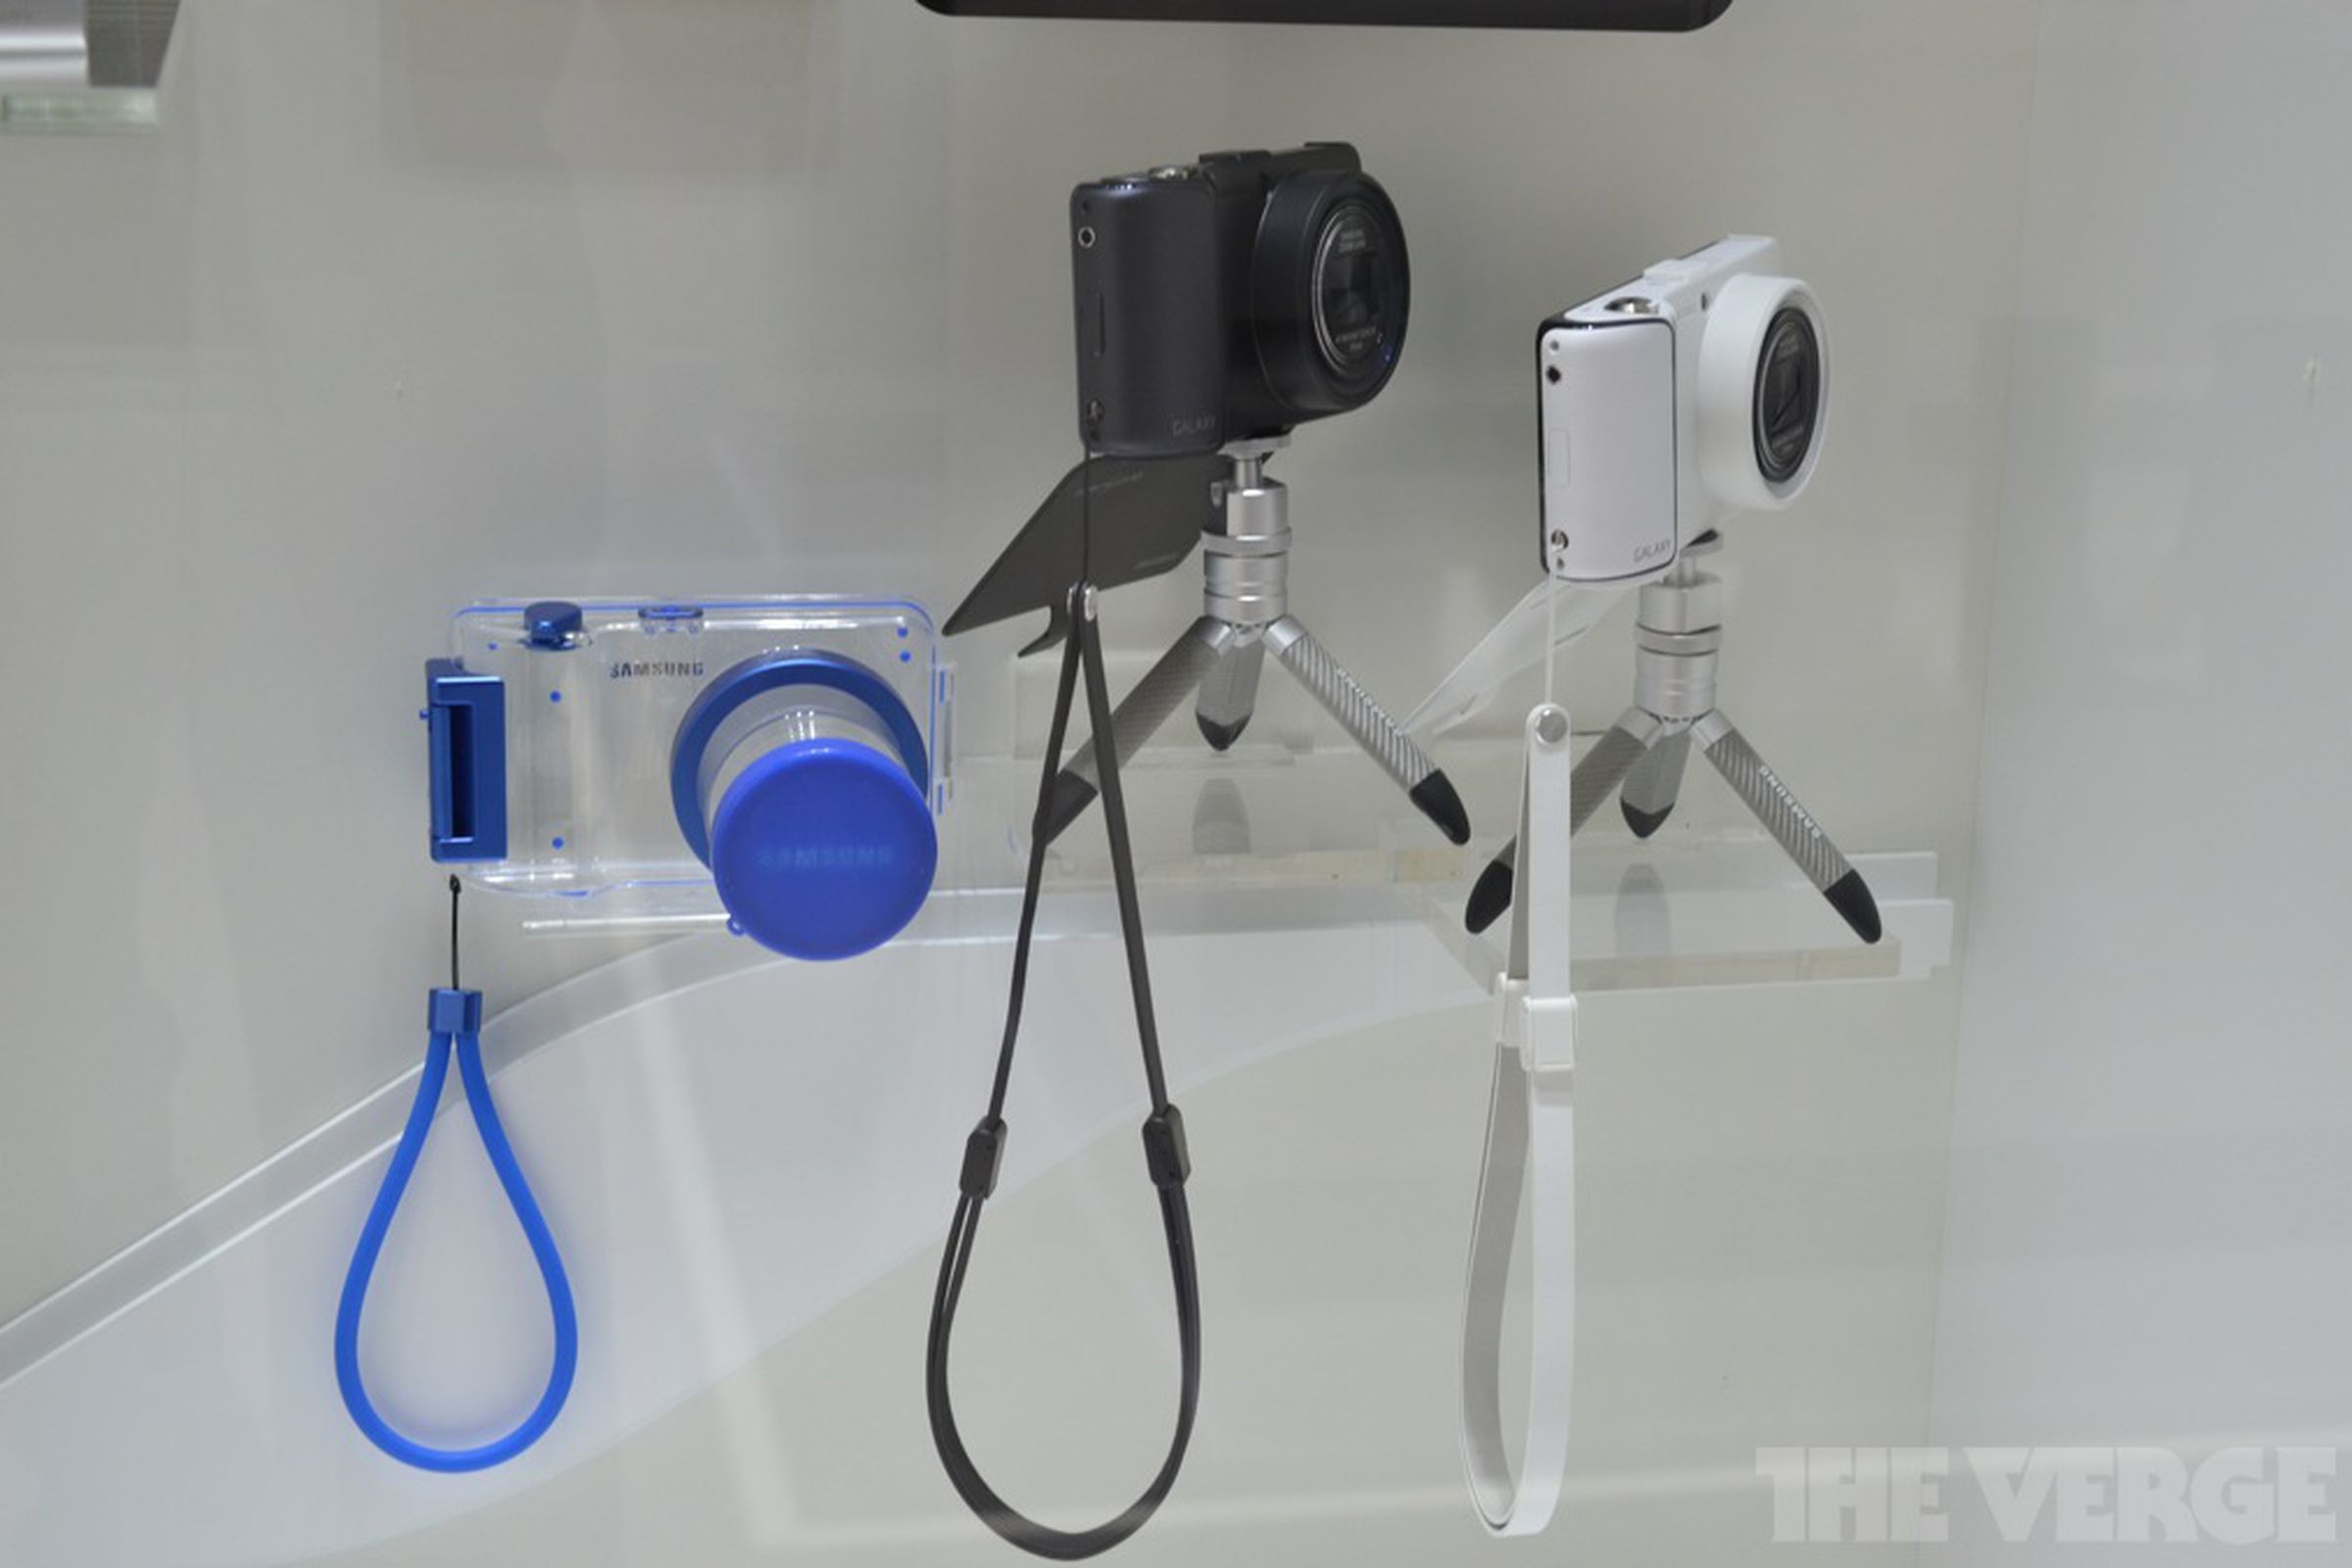 Gallery Photo: Samsung Galaxy Camera accessory prototype photos